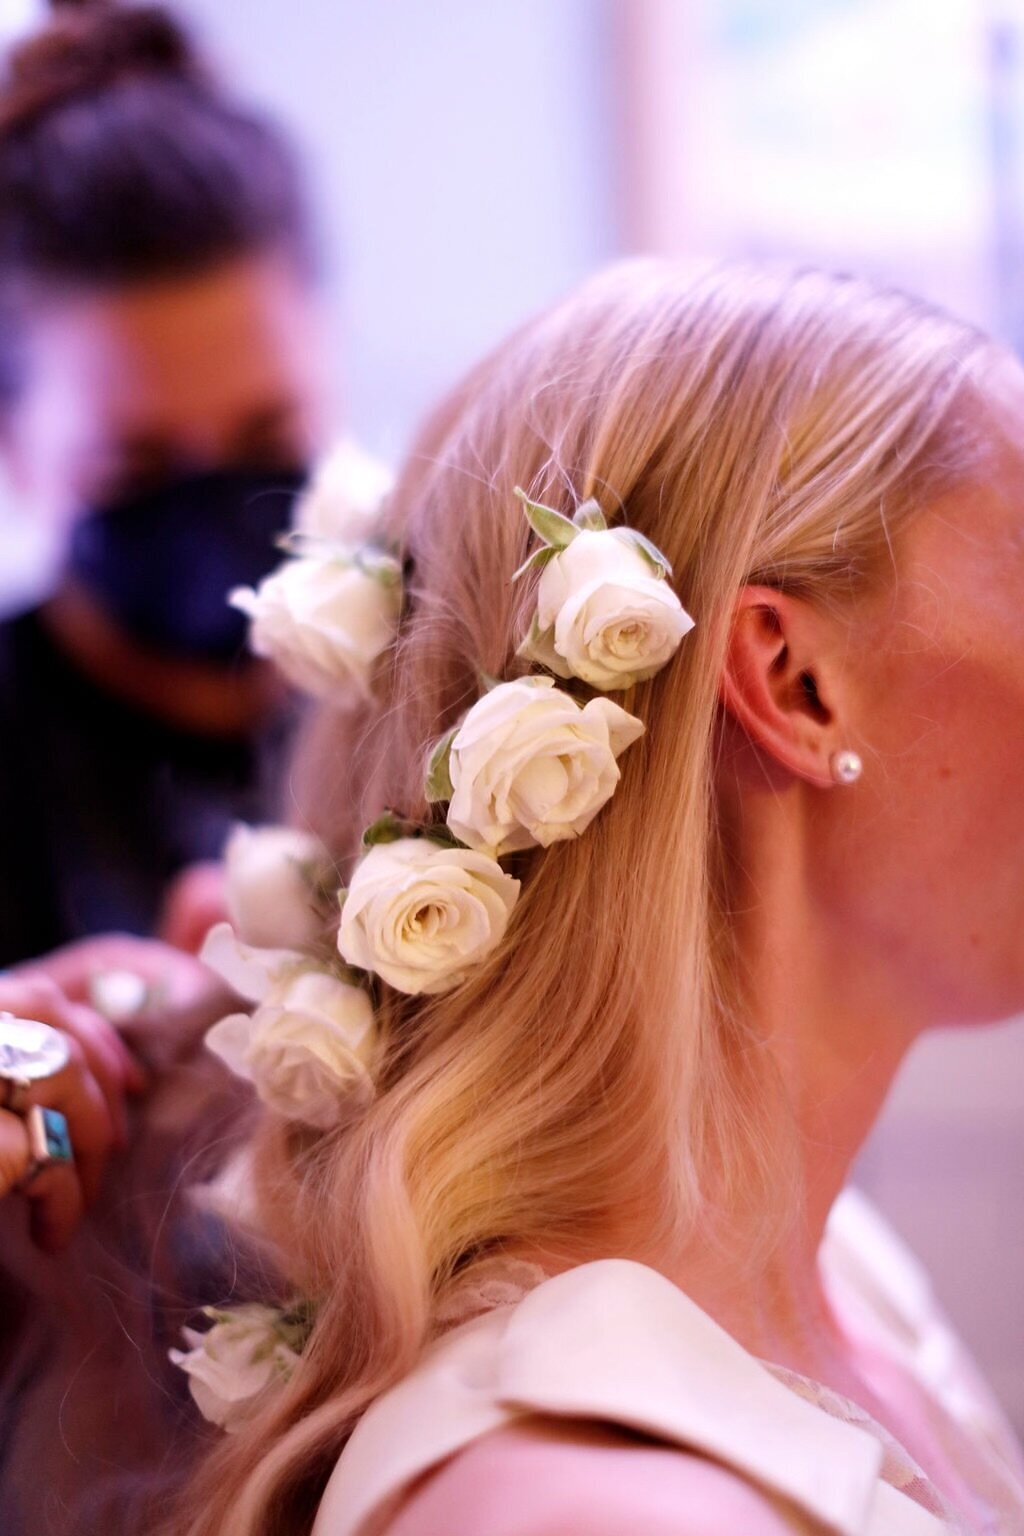 clean-natural-makeup-artist-modern-hair-erica-renee-beauty-MA-wedding-hair-flowers-in-hair-roses-team-updo-Berkshires-the-Mount-fashion-editorial-wedding-New-England-bride-luxury